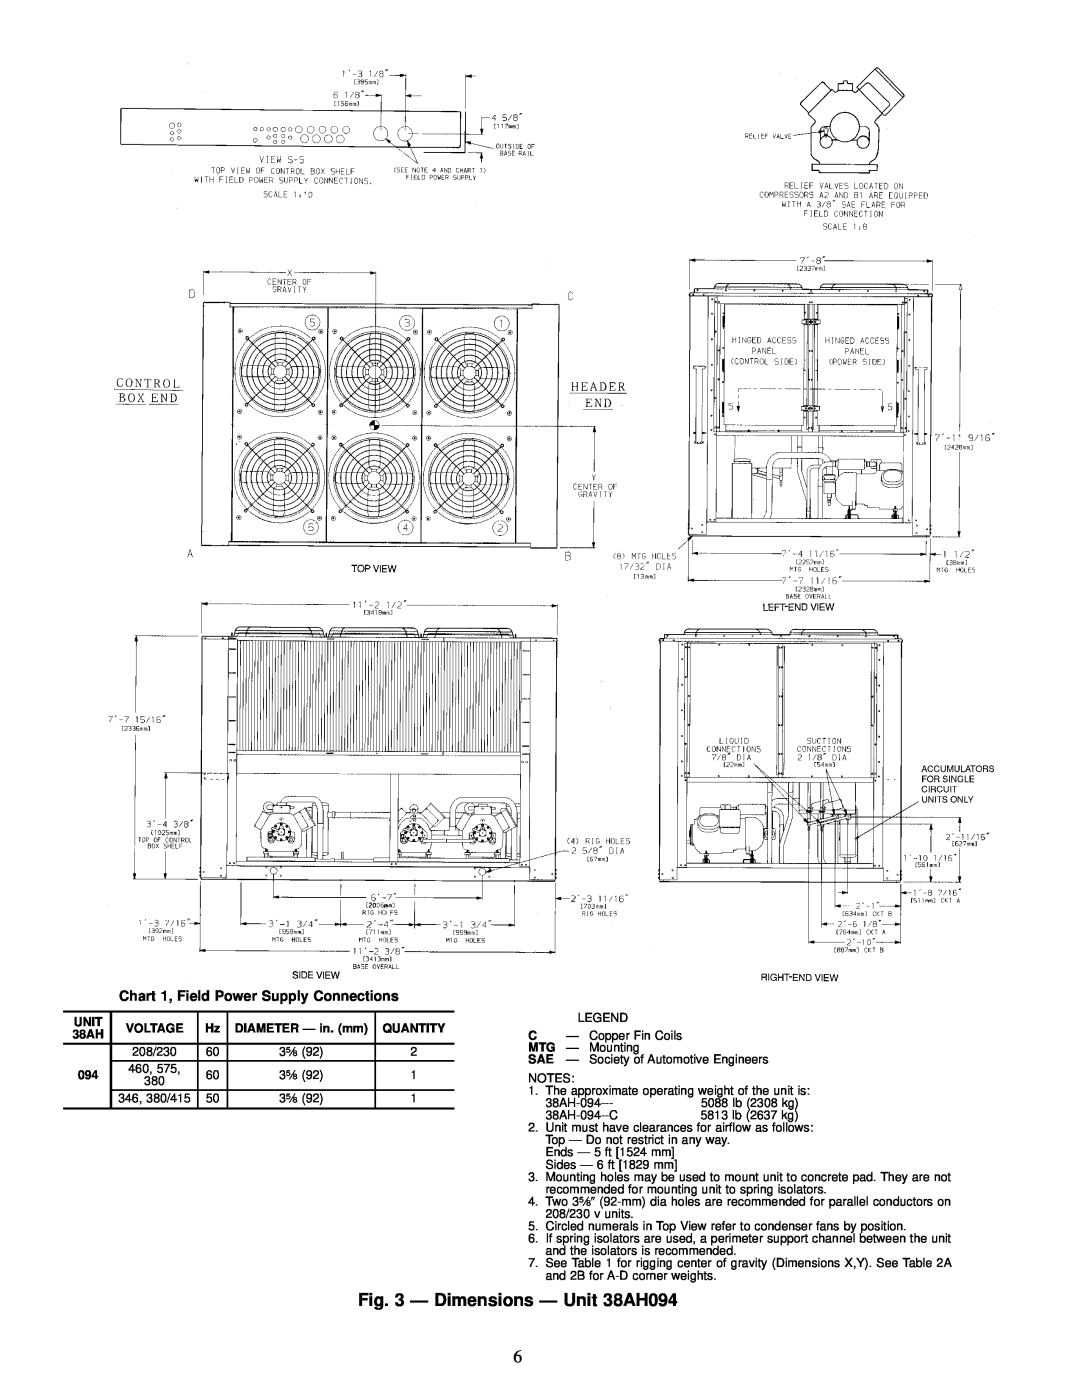 Carrier 38AH044-084 specifications Ð Dimensions Ð Unit 38AH094, Voltage, DIAMETER Ð in. mm, Quantity 